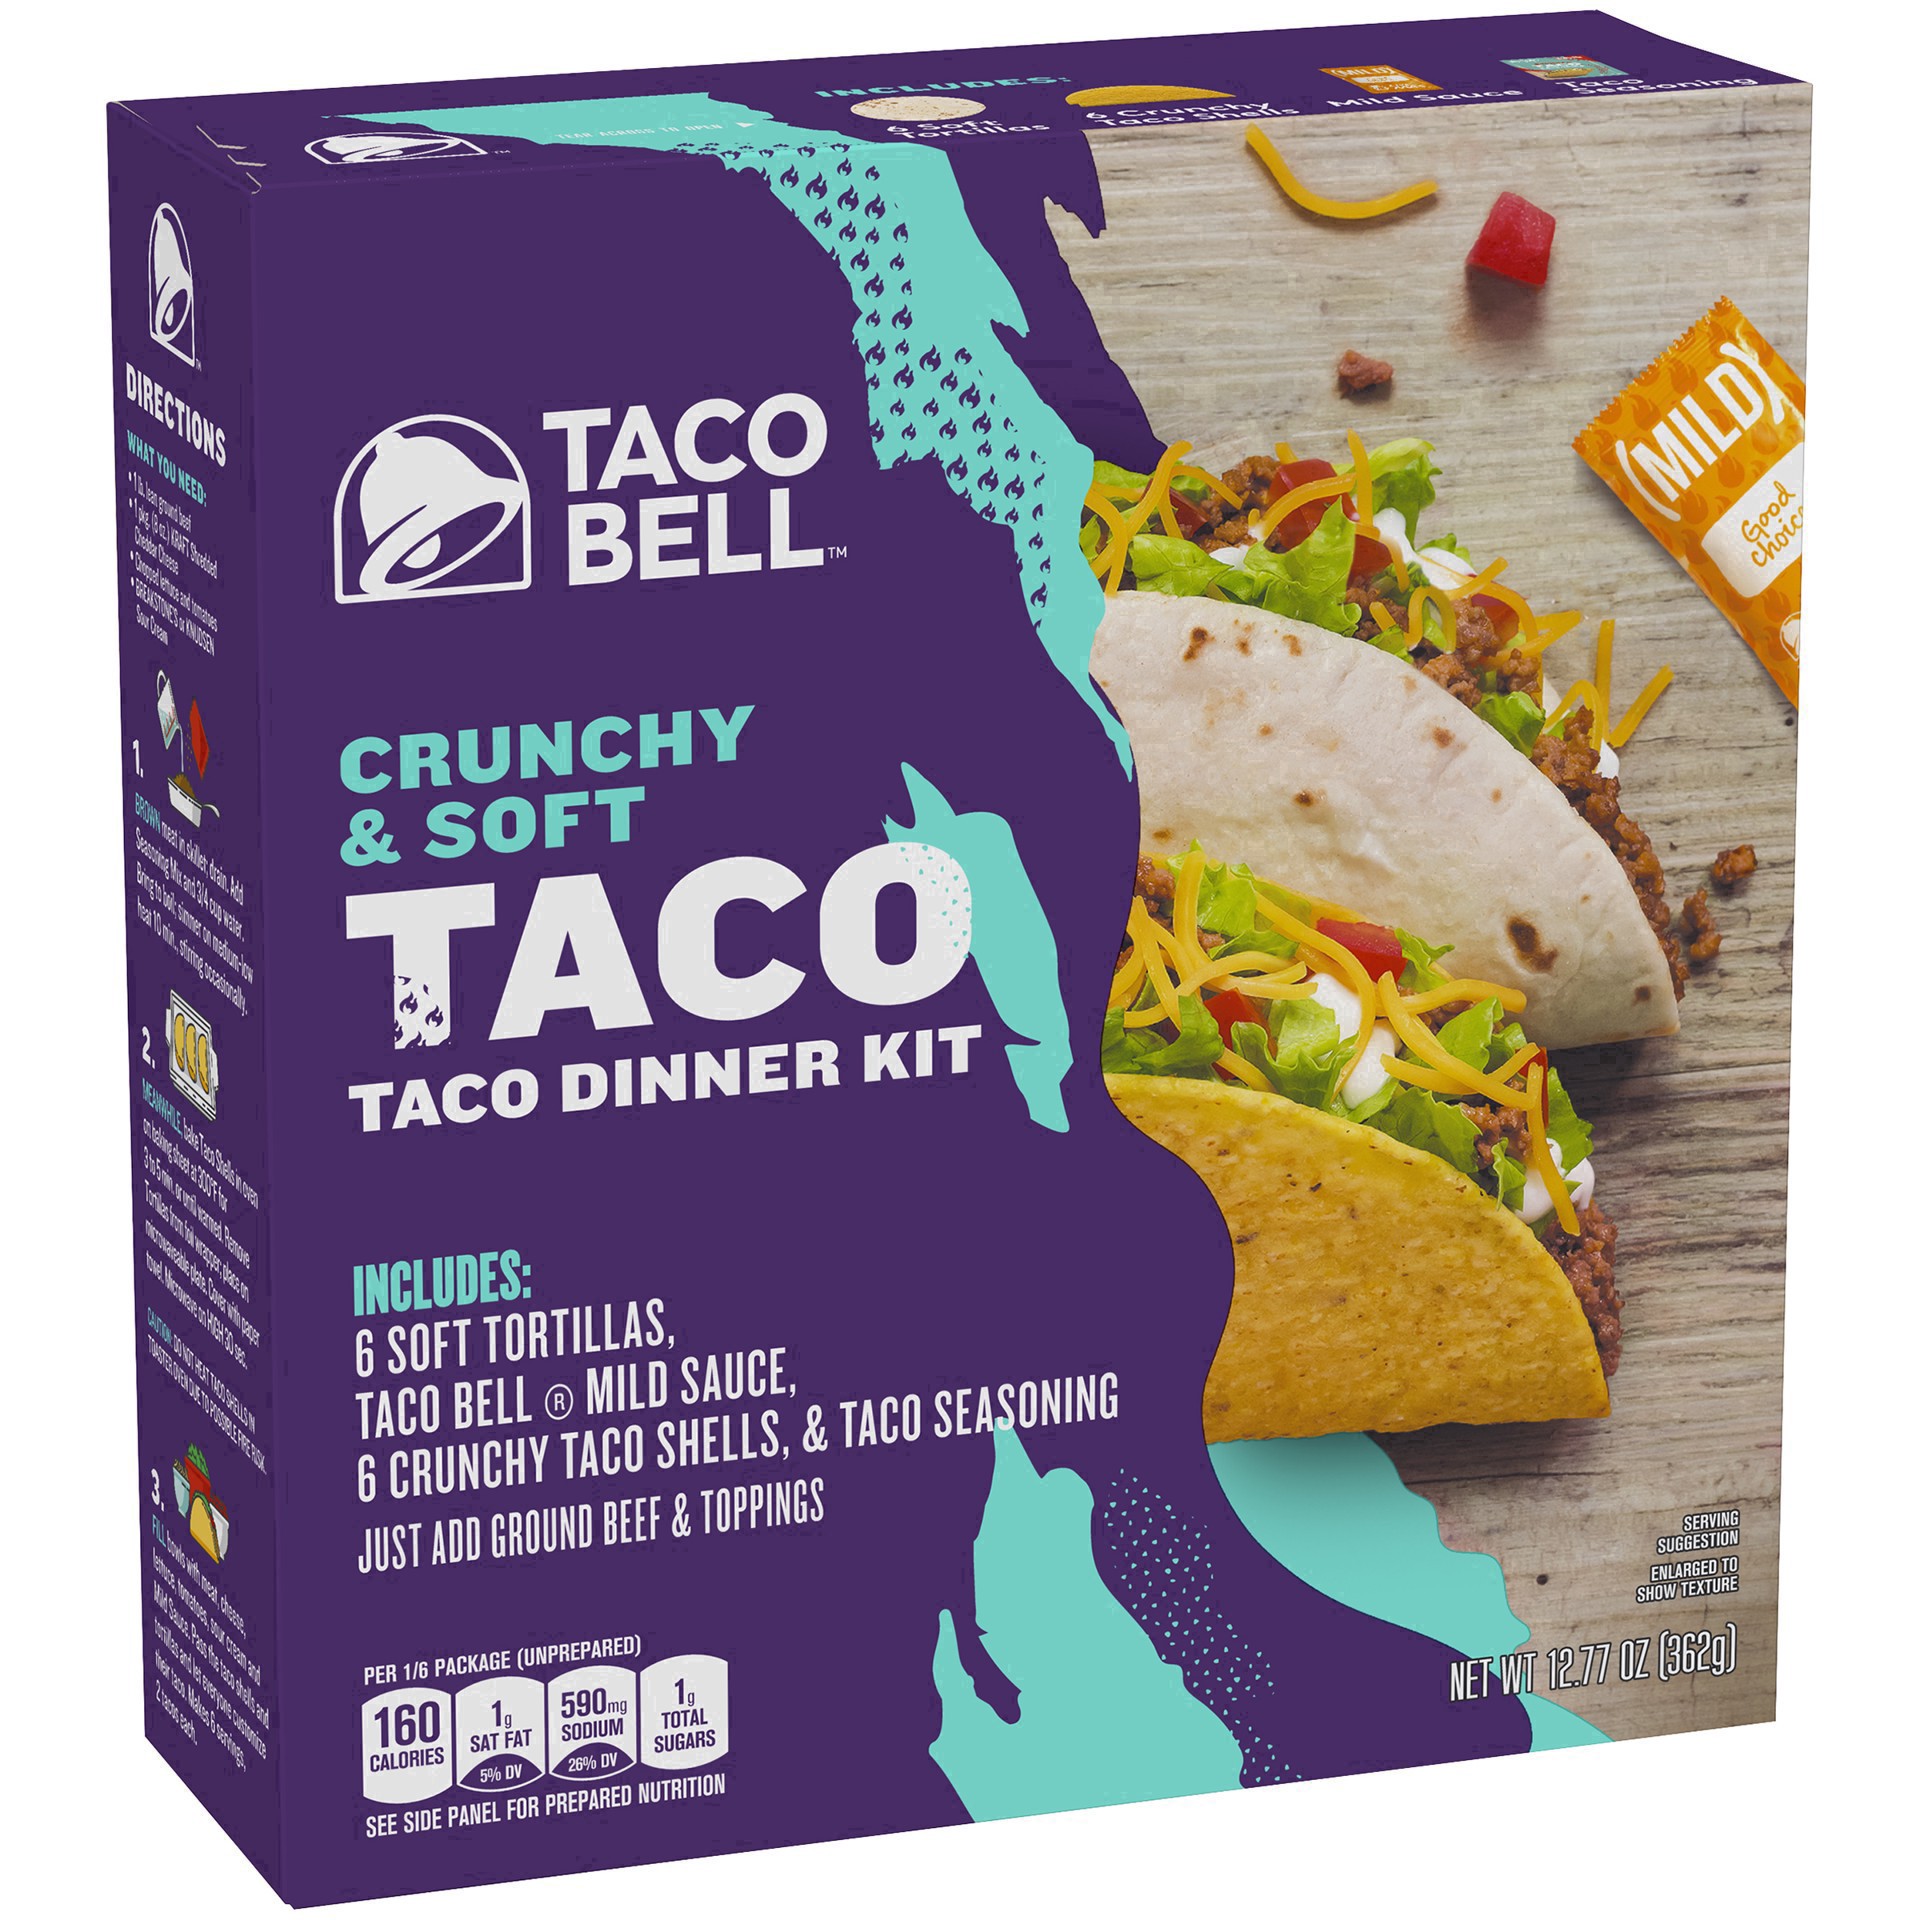 slide 76 of 101, Taco Bell Crunchy & Soft Taco Cravings Kit with 6 Soft Tortillas, 6 Crunchy Taco Shells, Taco Bell Mild Sauce & Seasoning, 12.77 oz Box, 1 ea